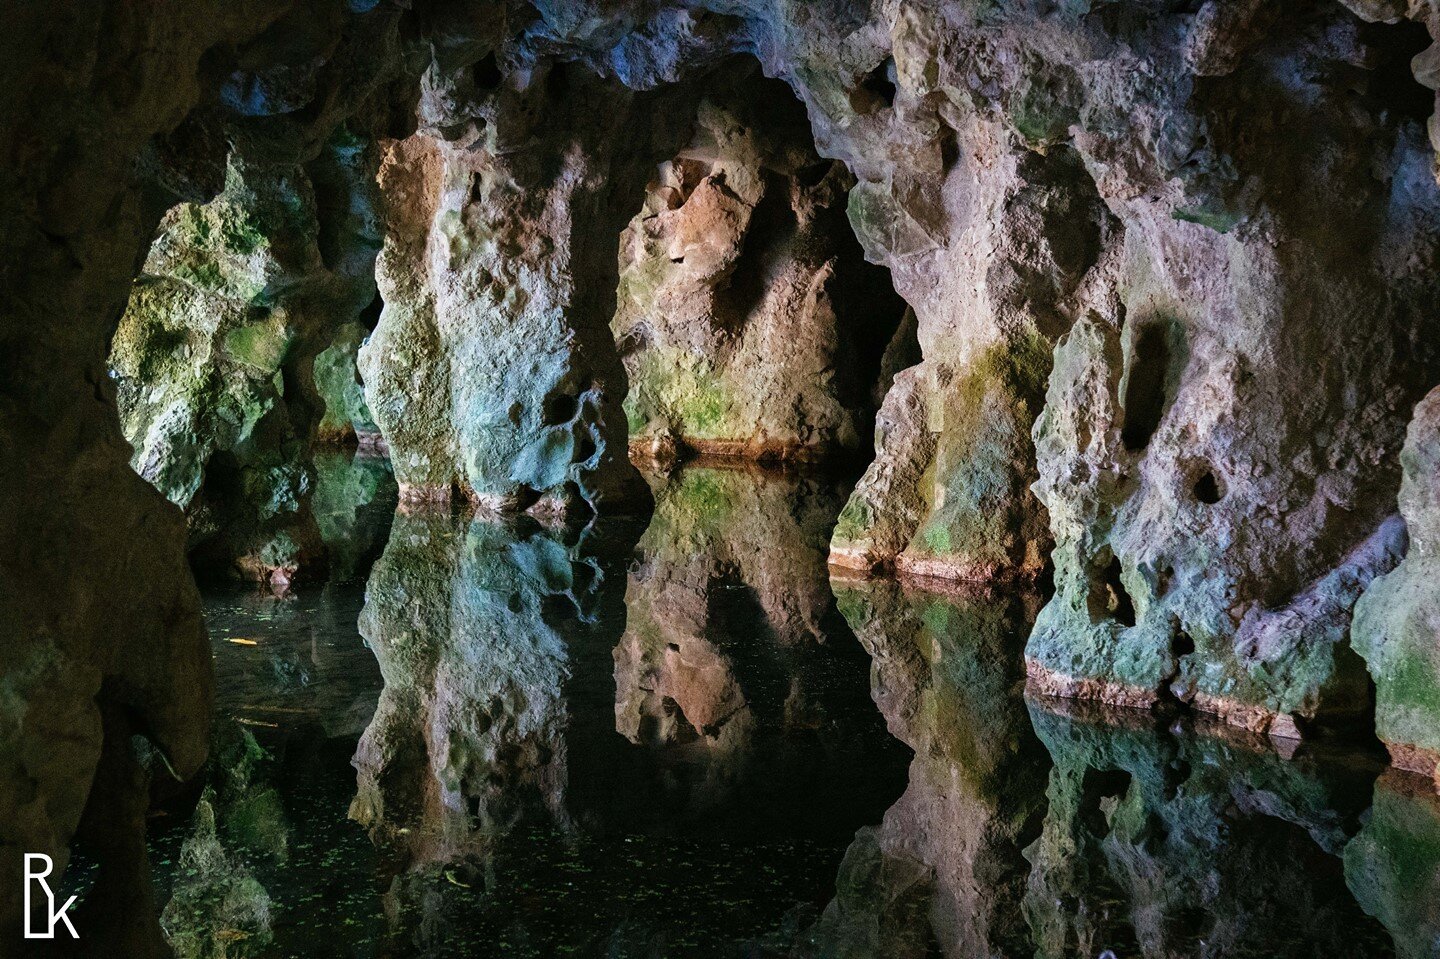 From inside the Sintra Cave ⁠
.⁠
.⁠
.⁠
.⁠
.⁠
#sintra #portugal #cave #travel #travelphotography #travelgram #travelawesome #instatravel #instago #instapassport #natgeoyourshot #yourshotphotographer #wanderlust #explore #lonelyplanet #nategeotravel #n